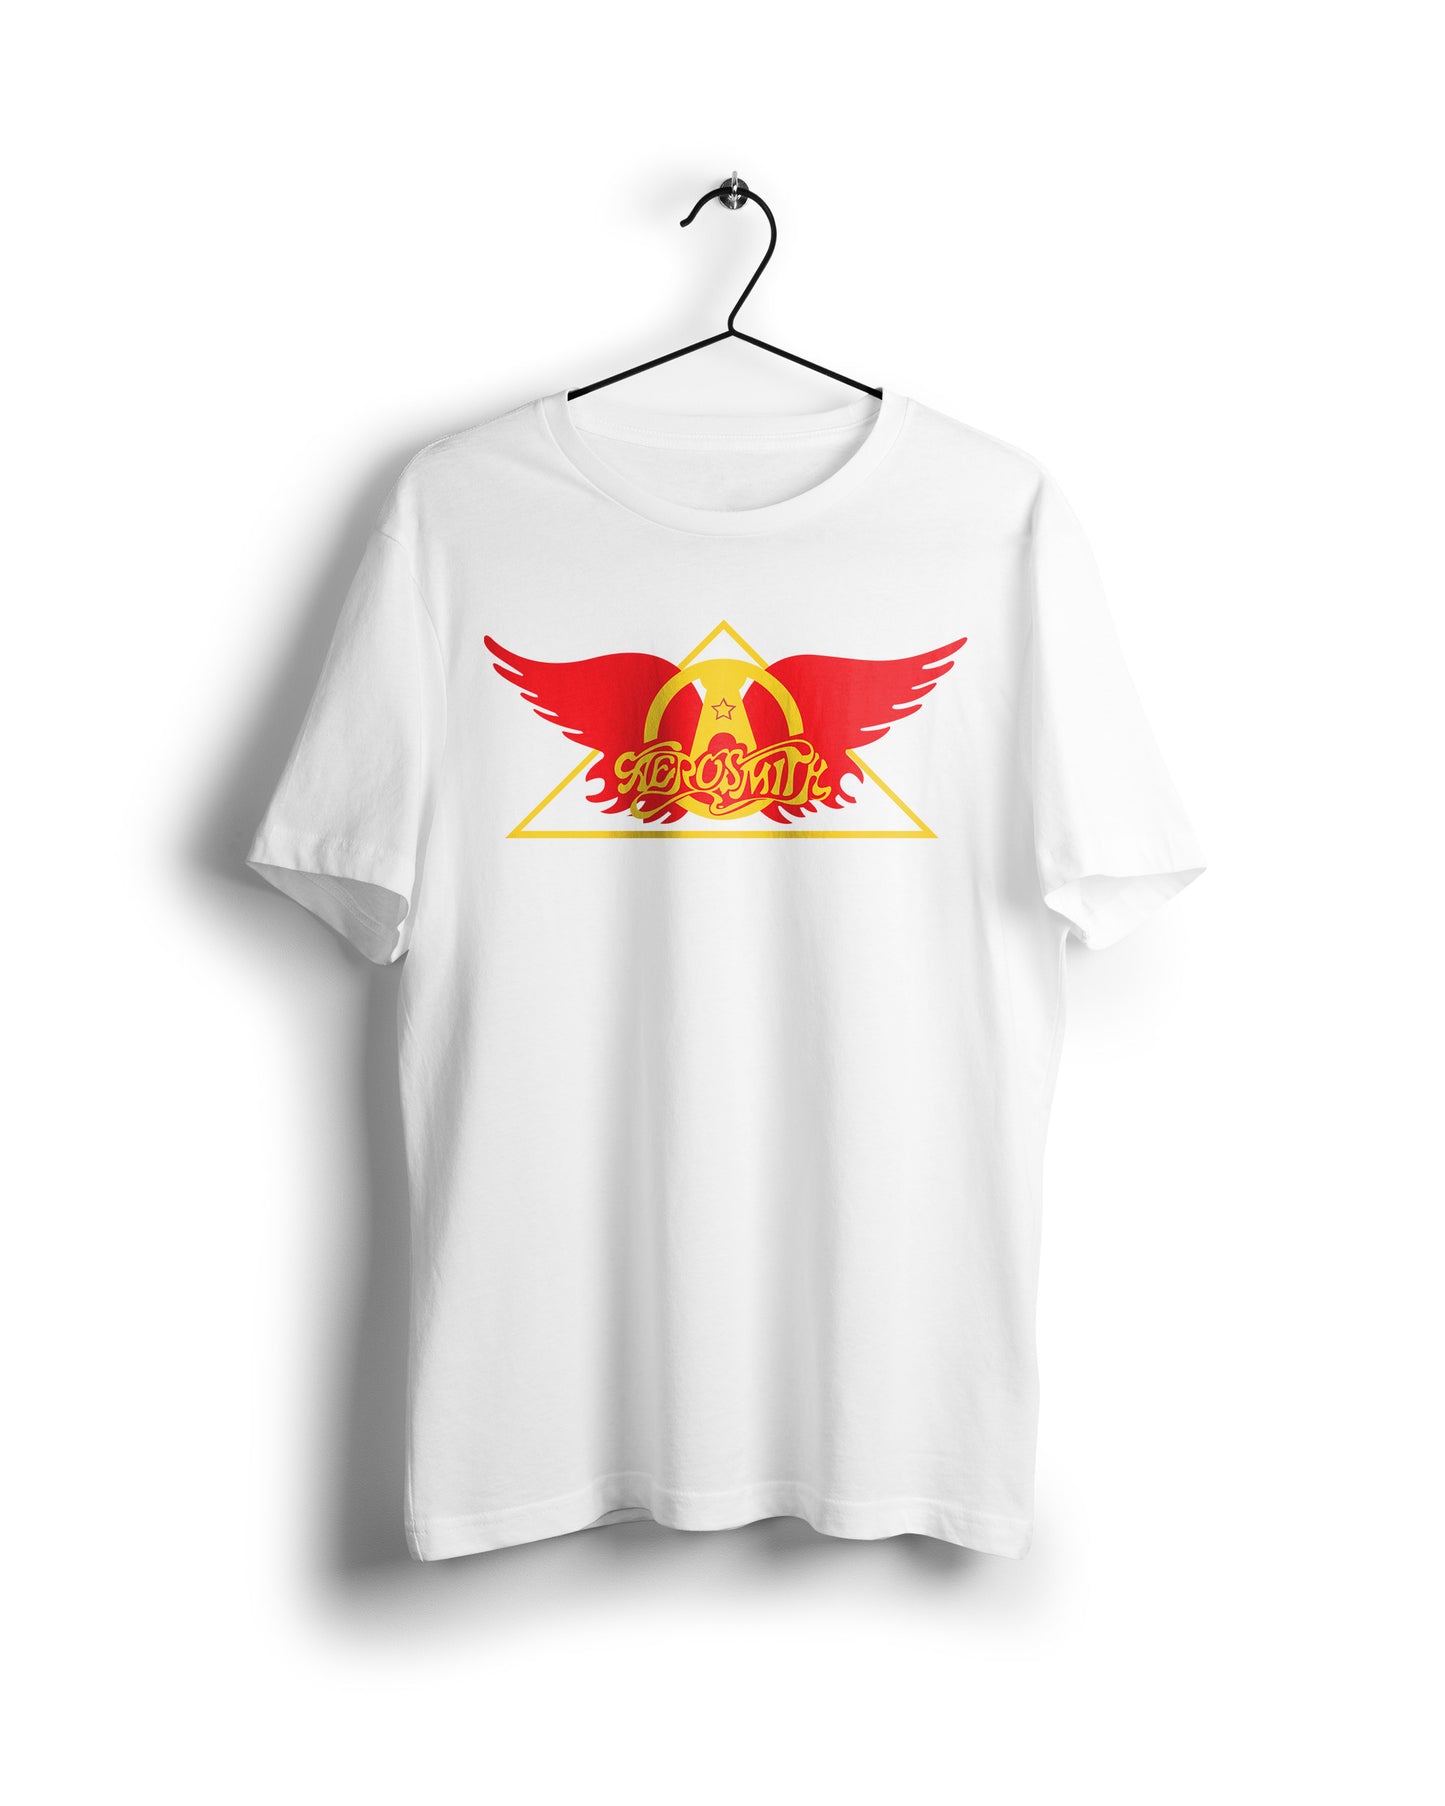 Aerosmith - Digital Graphics Basic T-shirt White